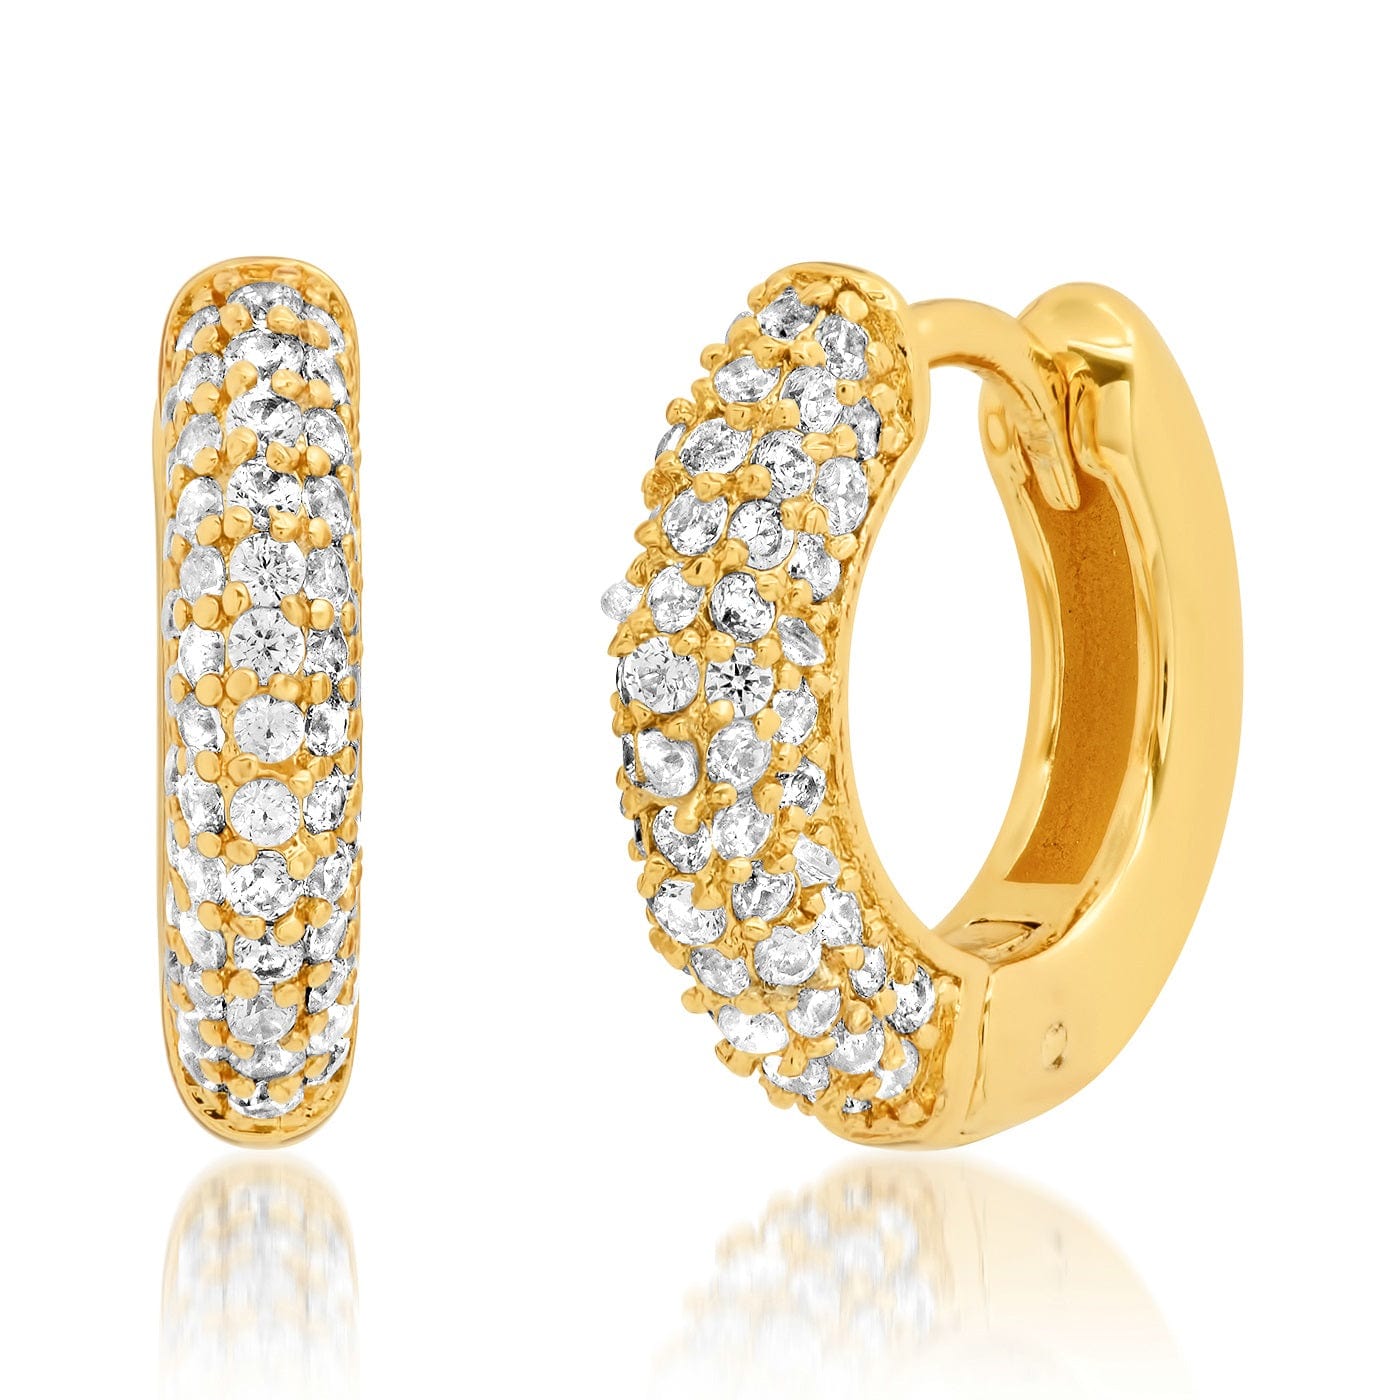 TAI JEWELRY Earrings Pave CZ Thick Gold Huggies